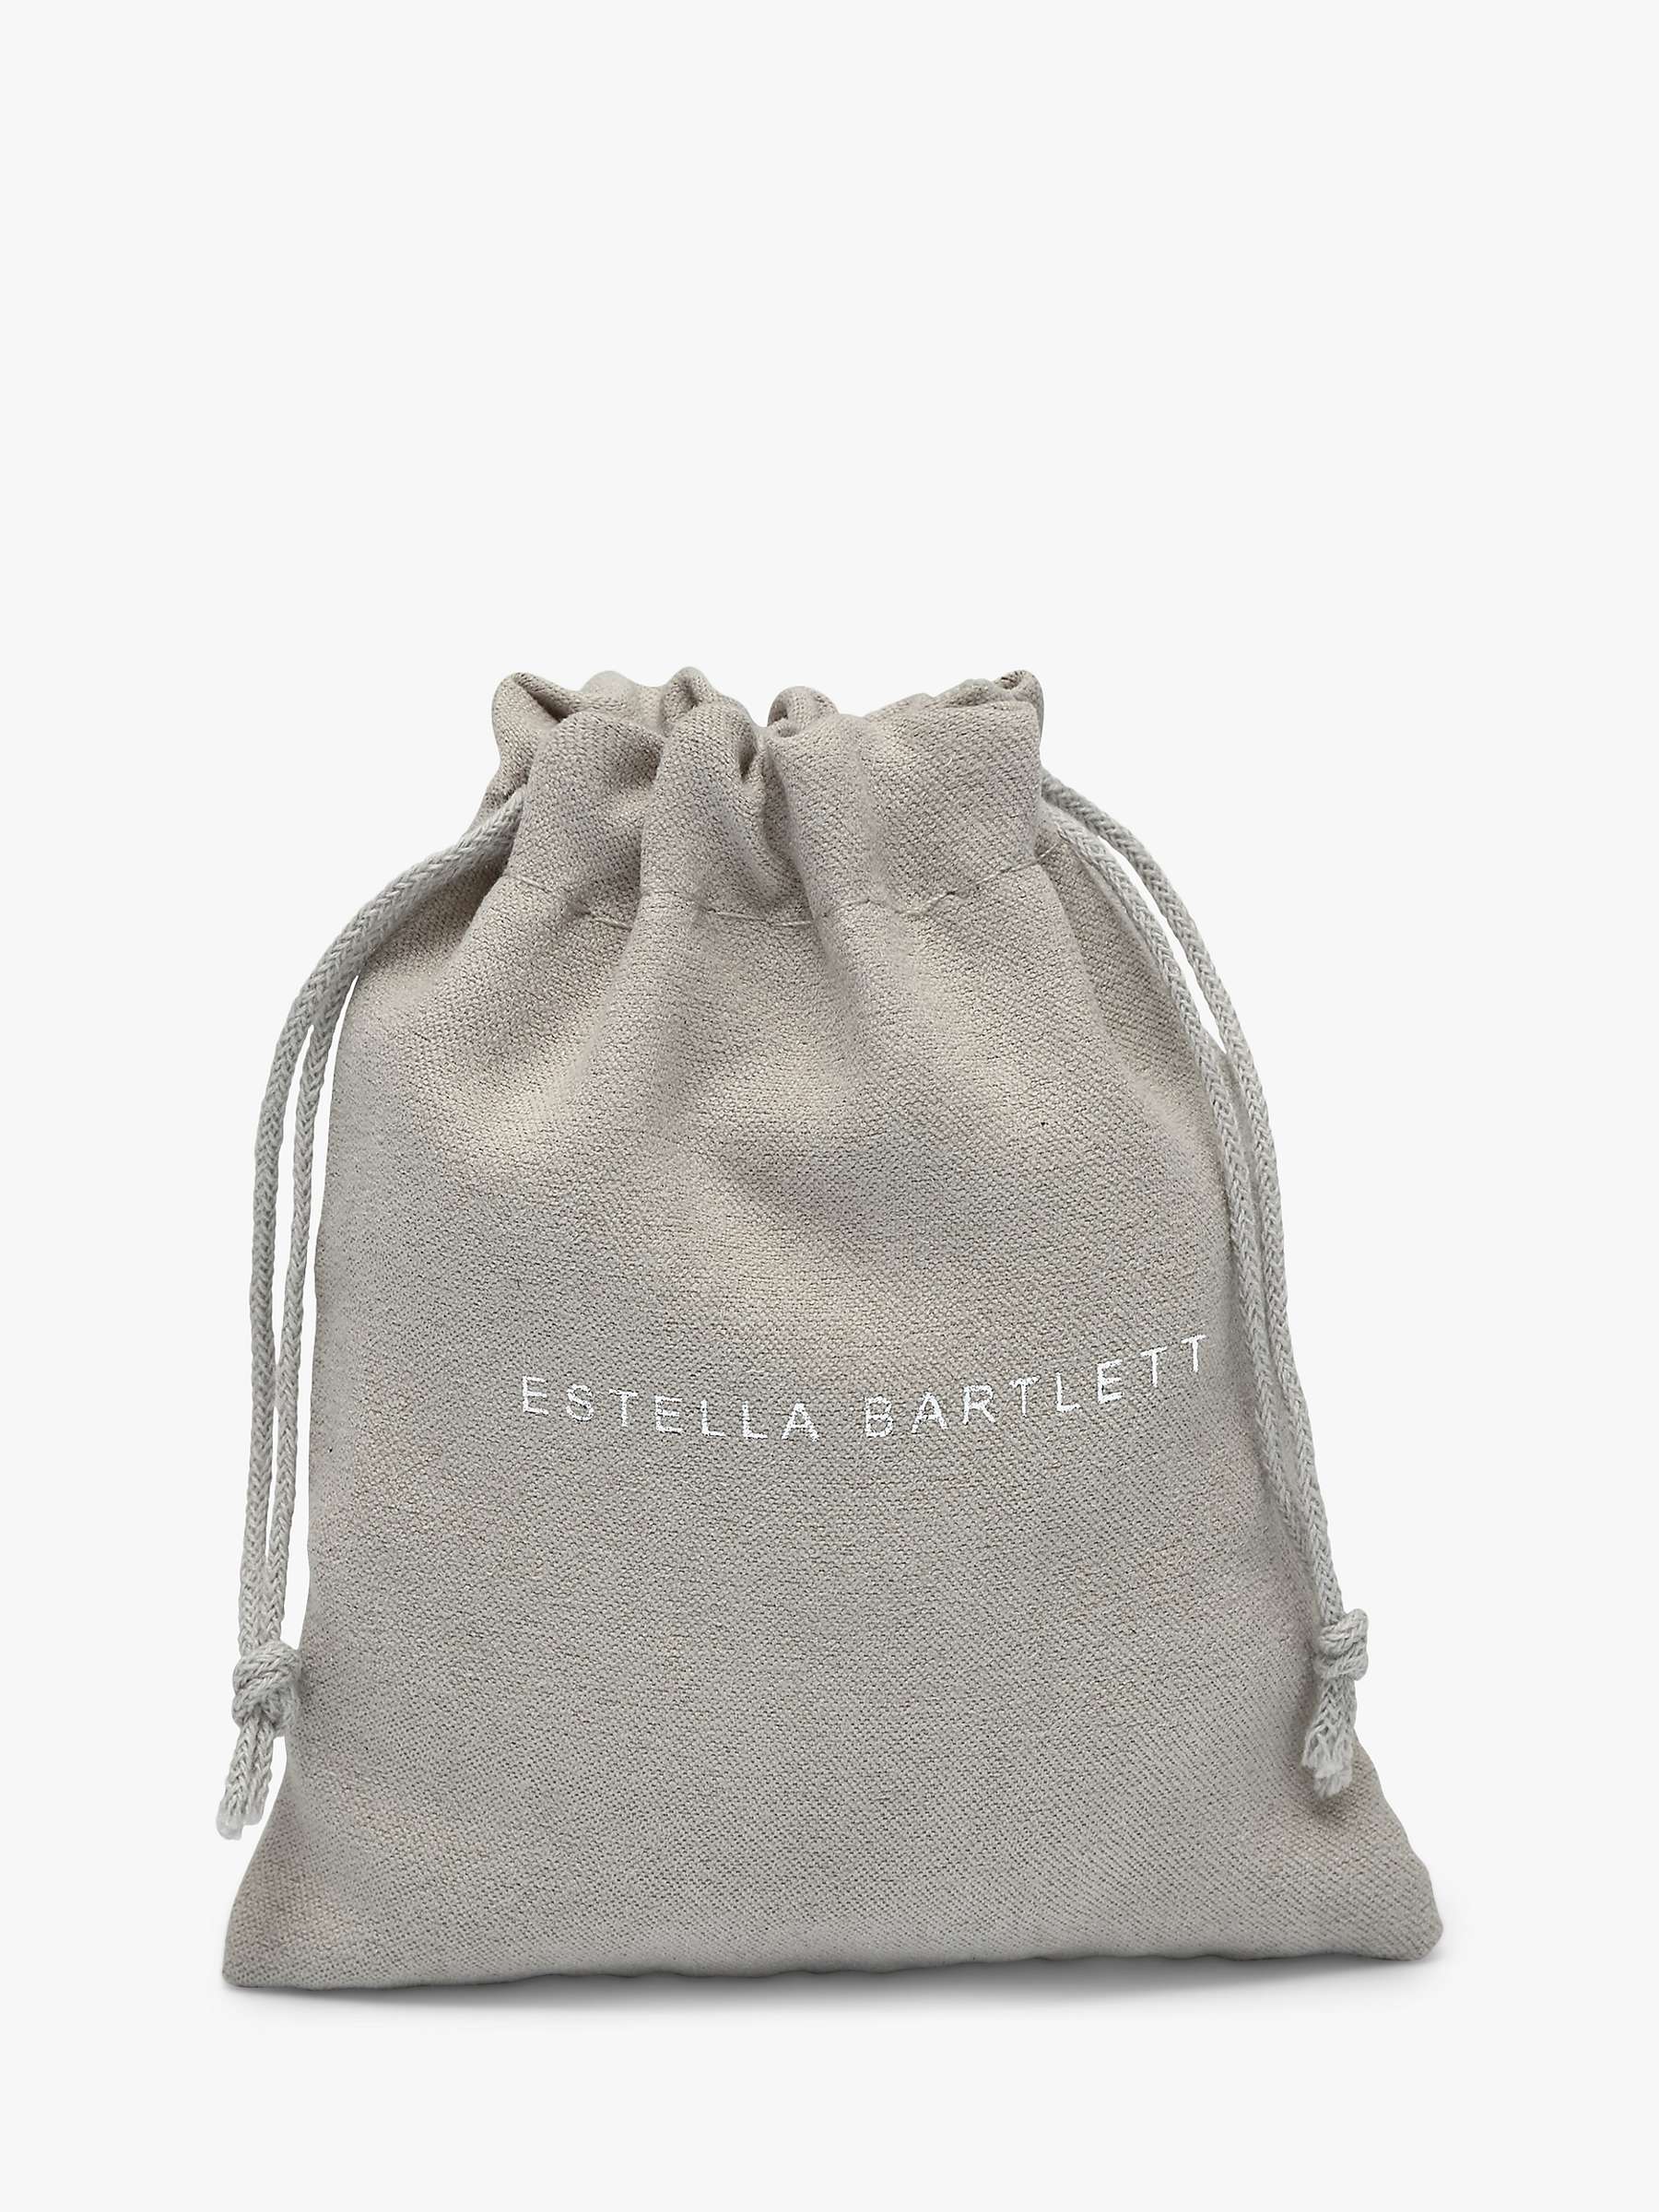 Buy Estella Bartlett Cubic Zirconia Star & Pearl Drop Earrings, Gold Online at johnlewis.com